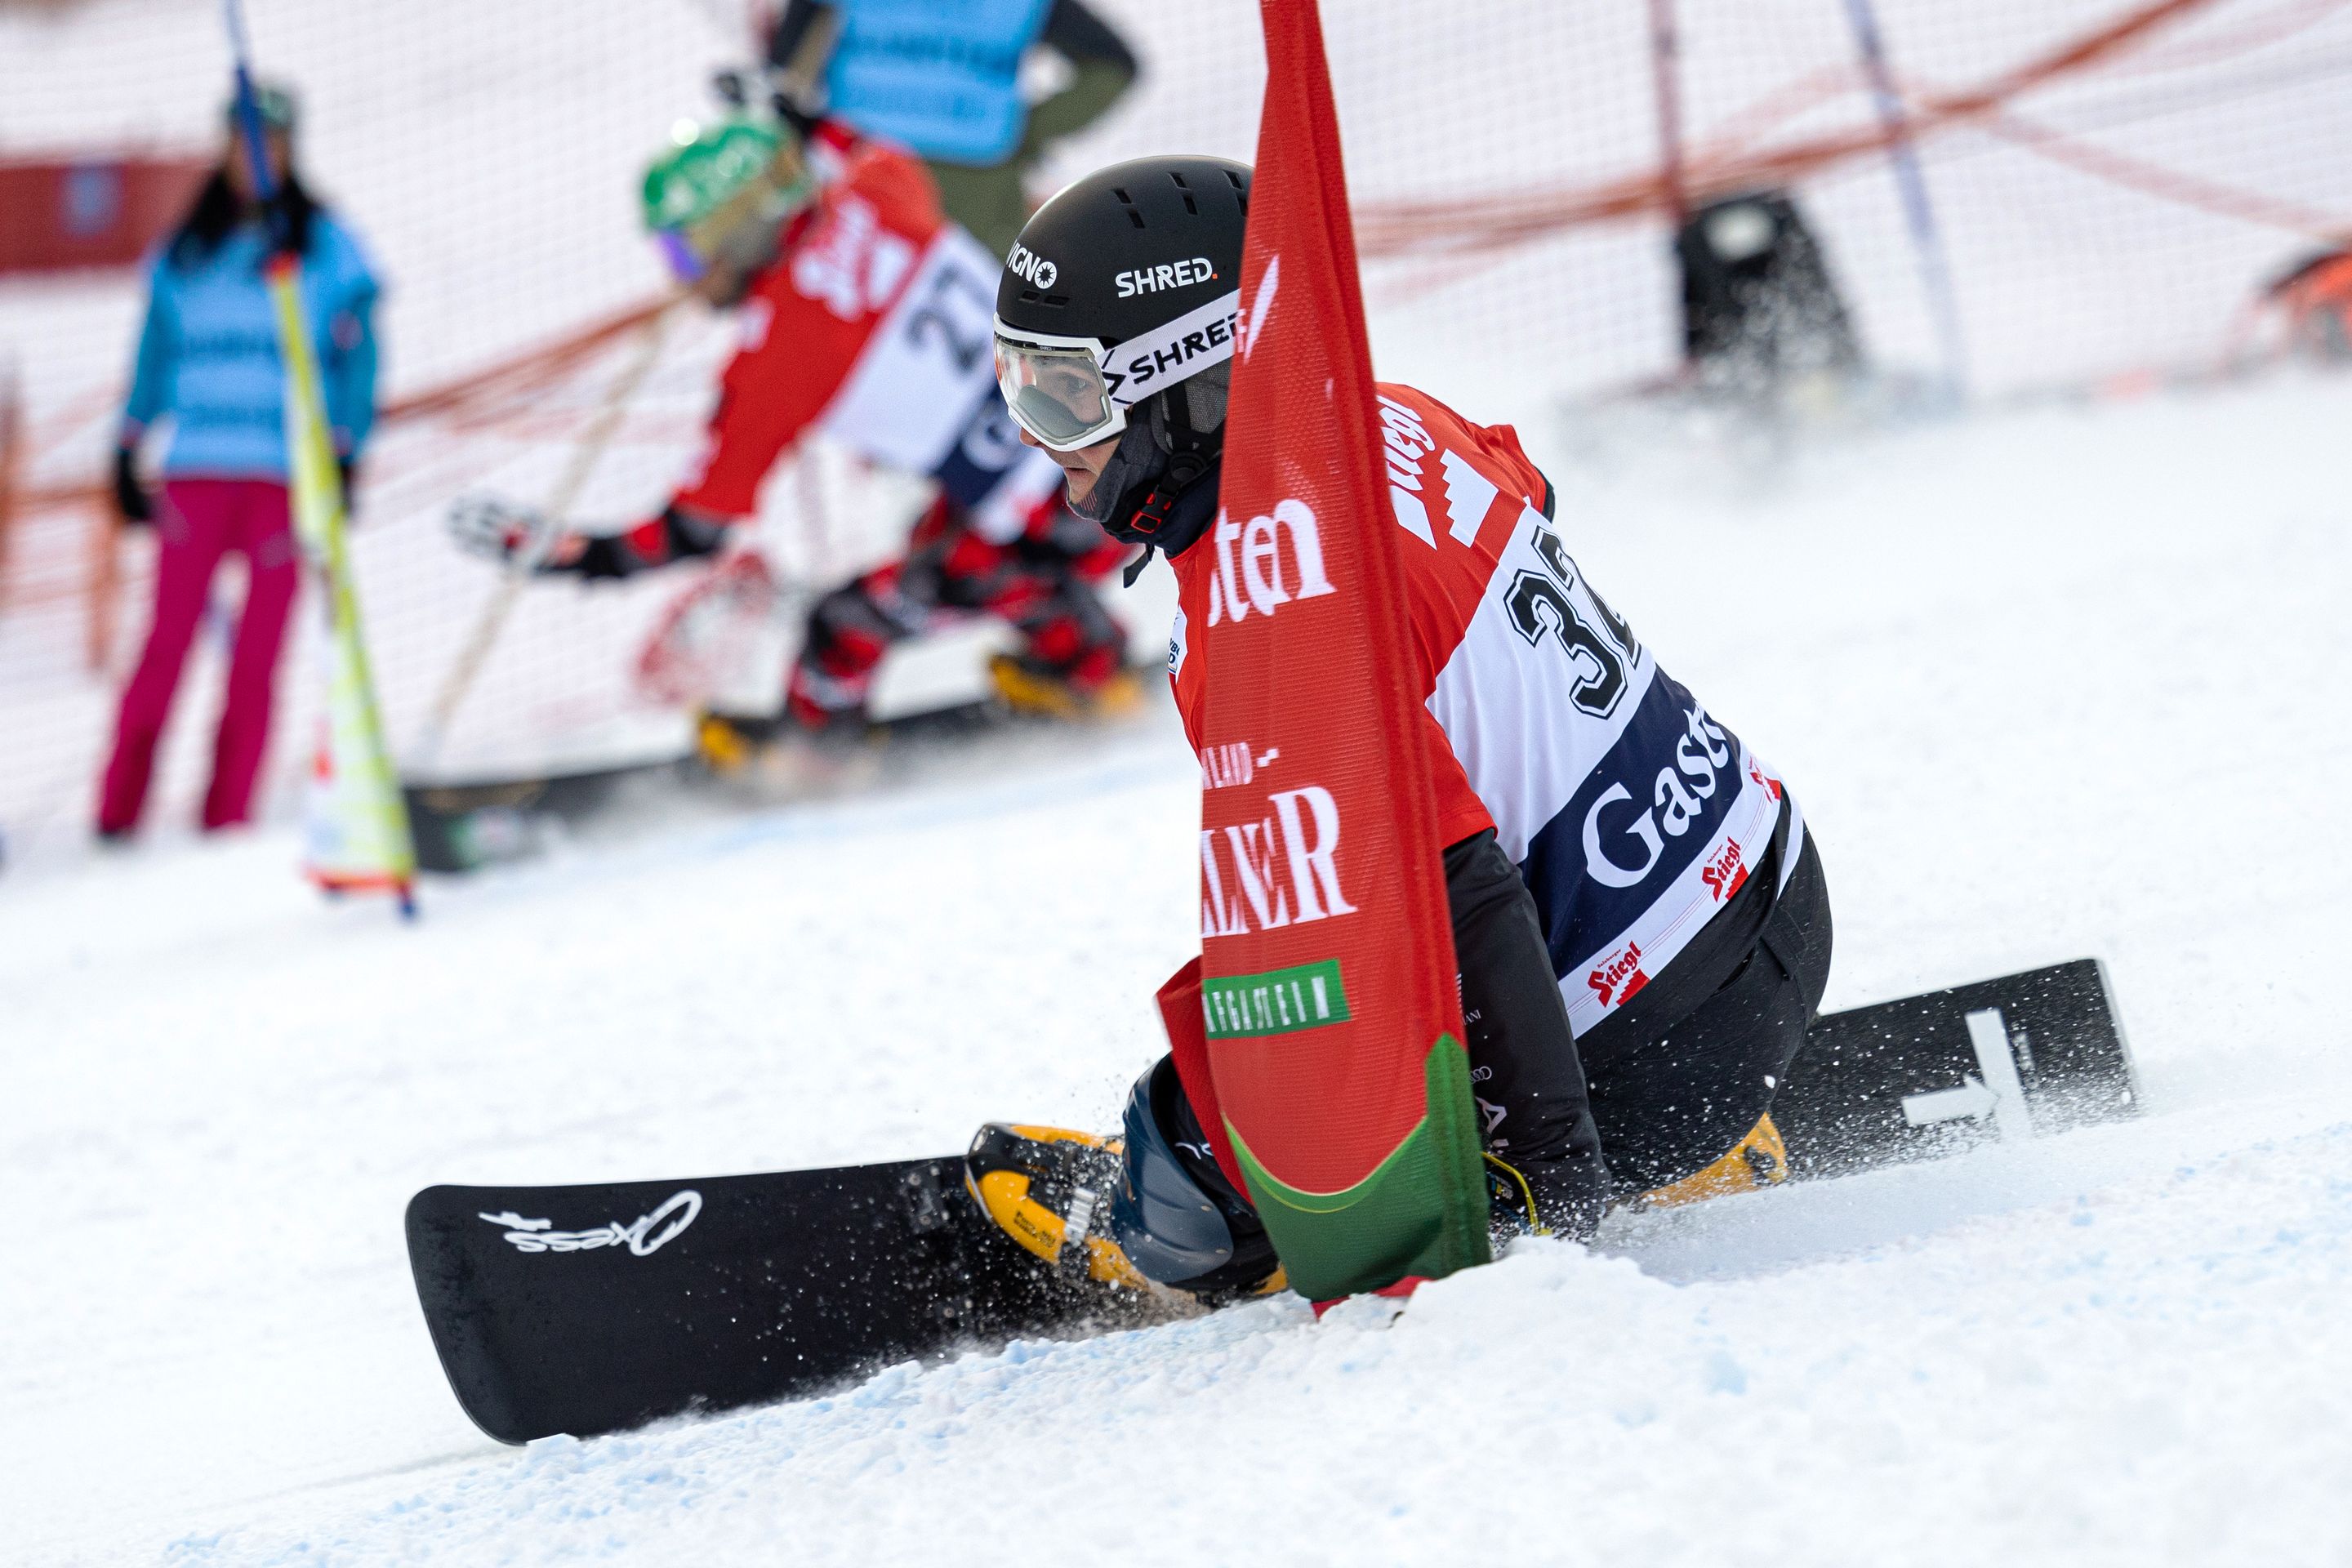 Maurizio Bormolini of Italy claims win in Bad Gastein ©Miha Matavz/FIS